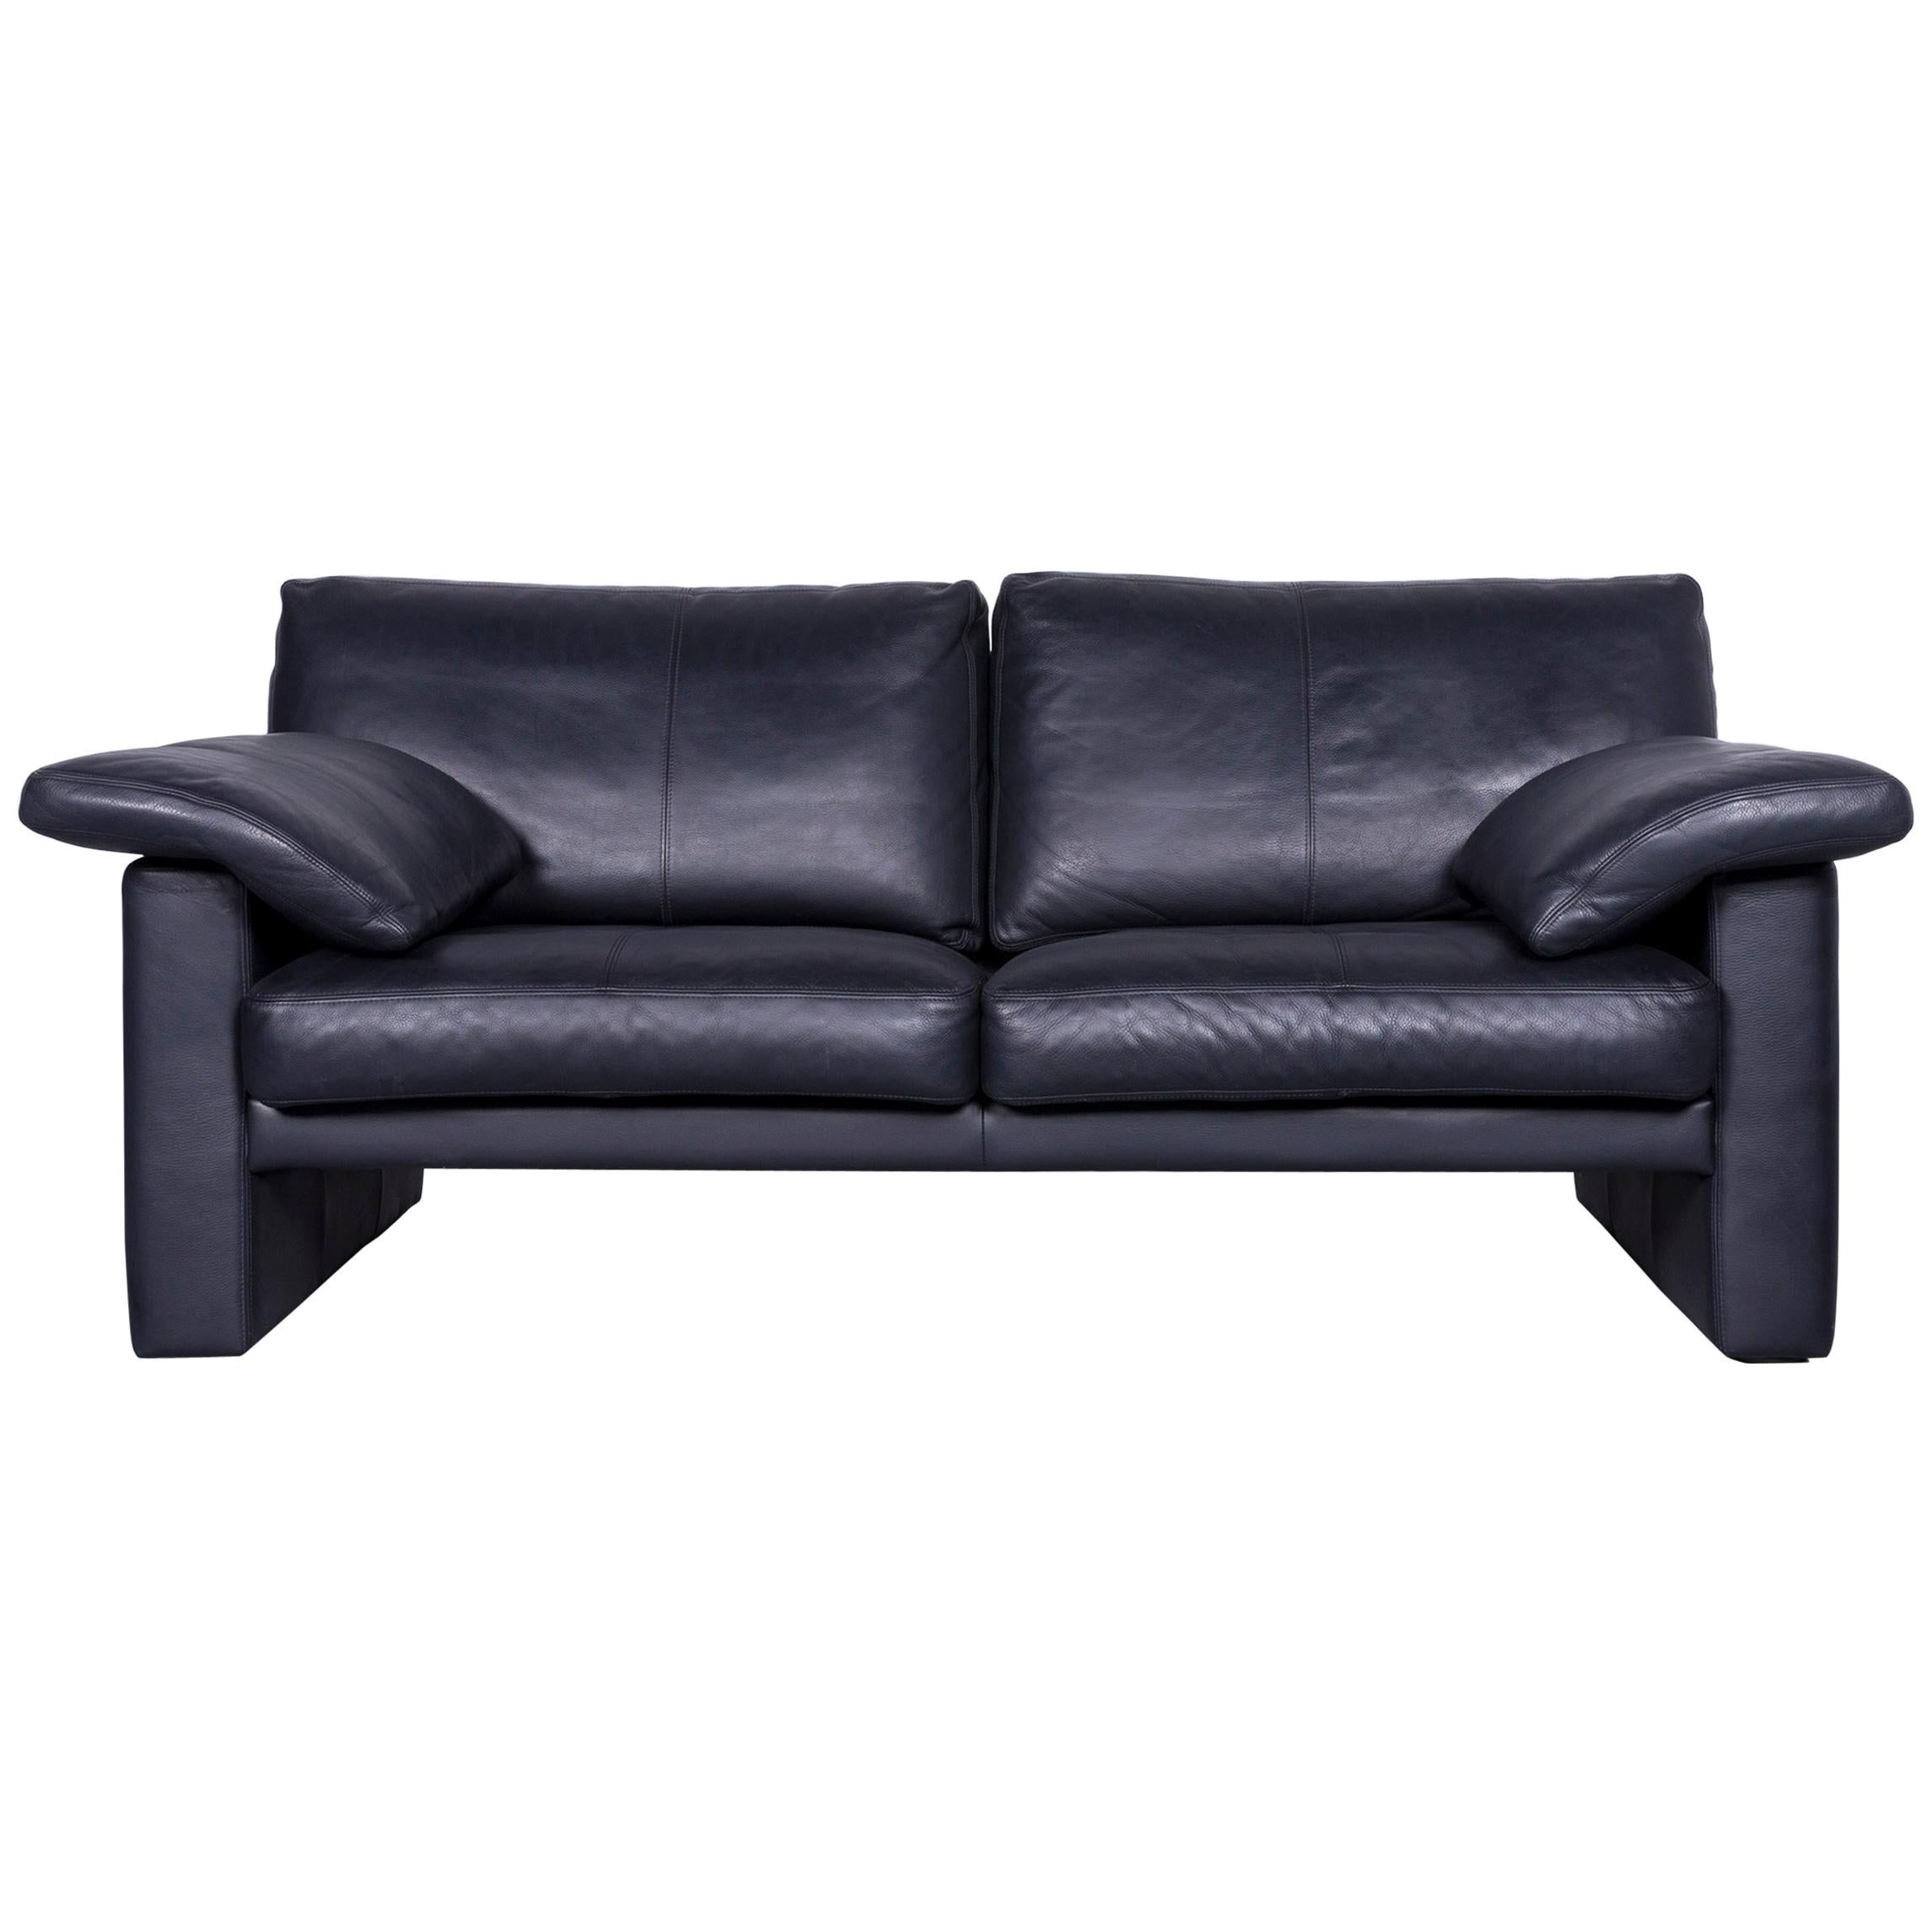 Erpo Designer Leather Sofa Black Two-Seat Couch